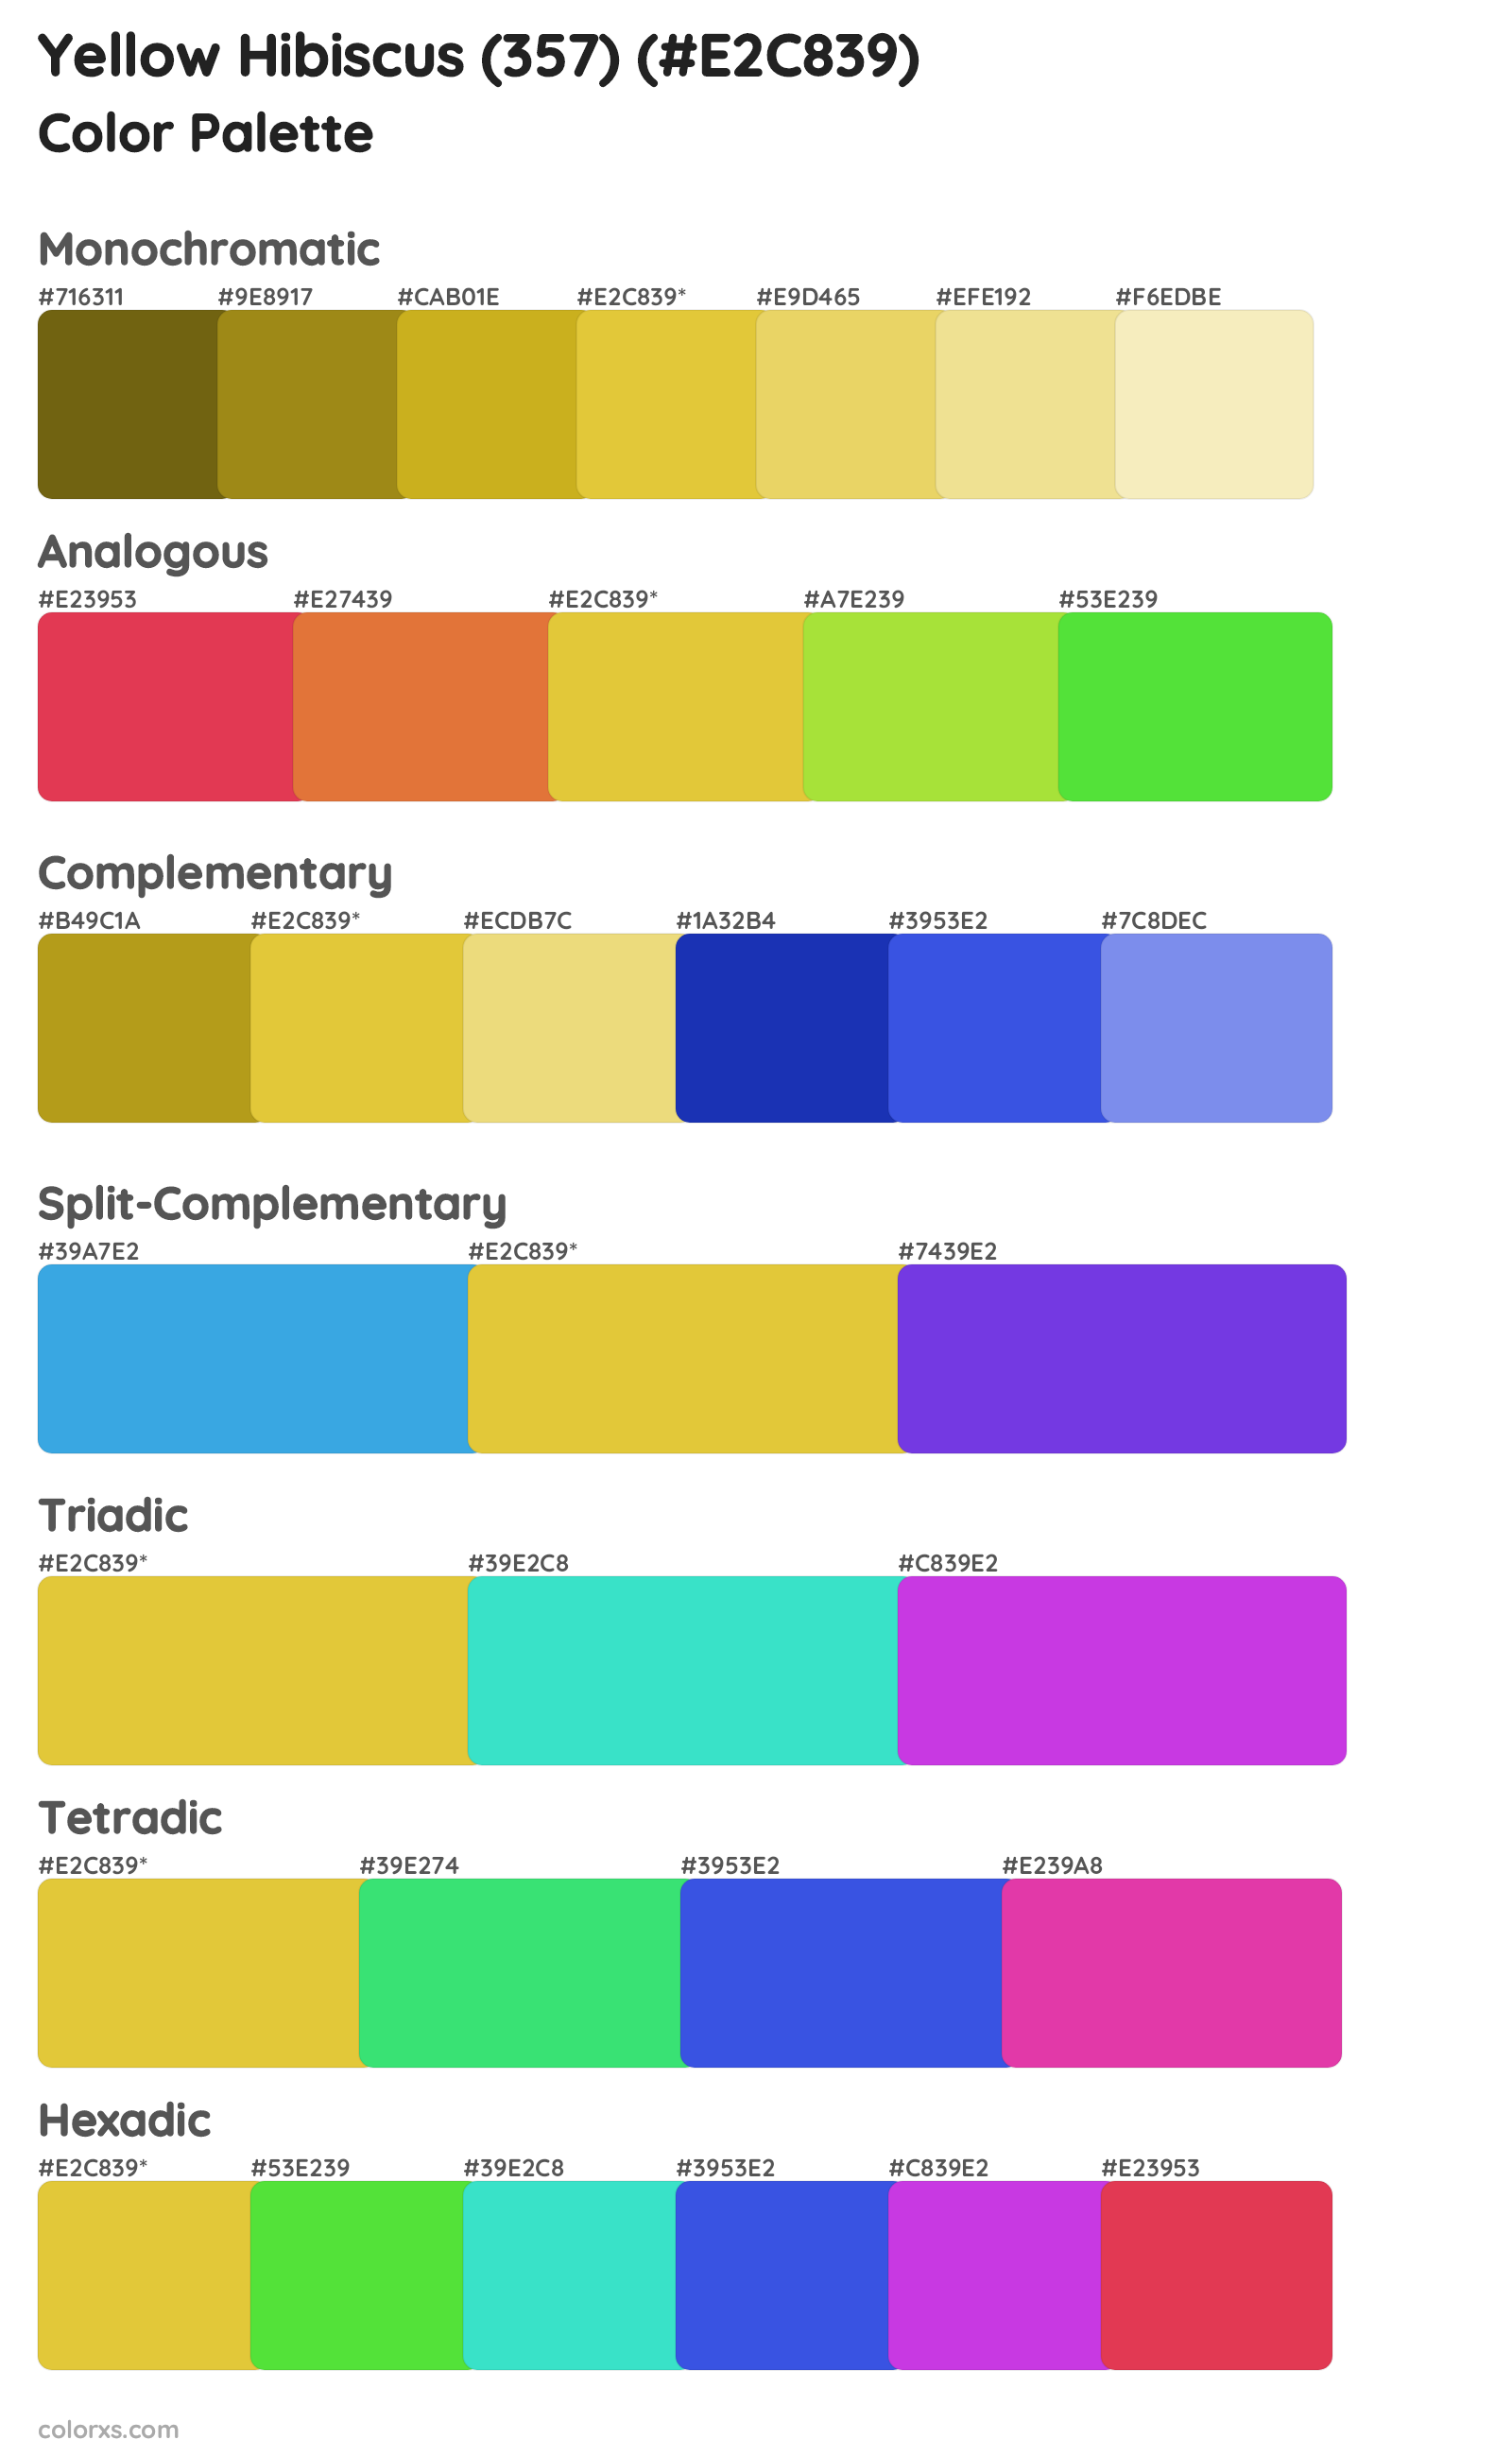 Yellow Hibiscus (357) Color Scheme Palettes